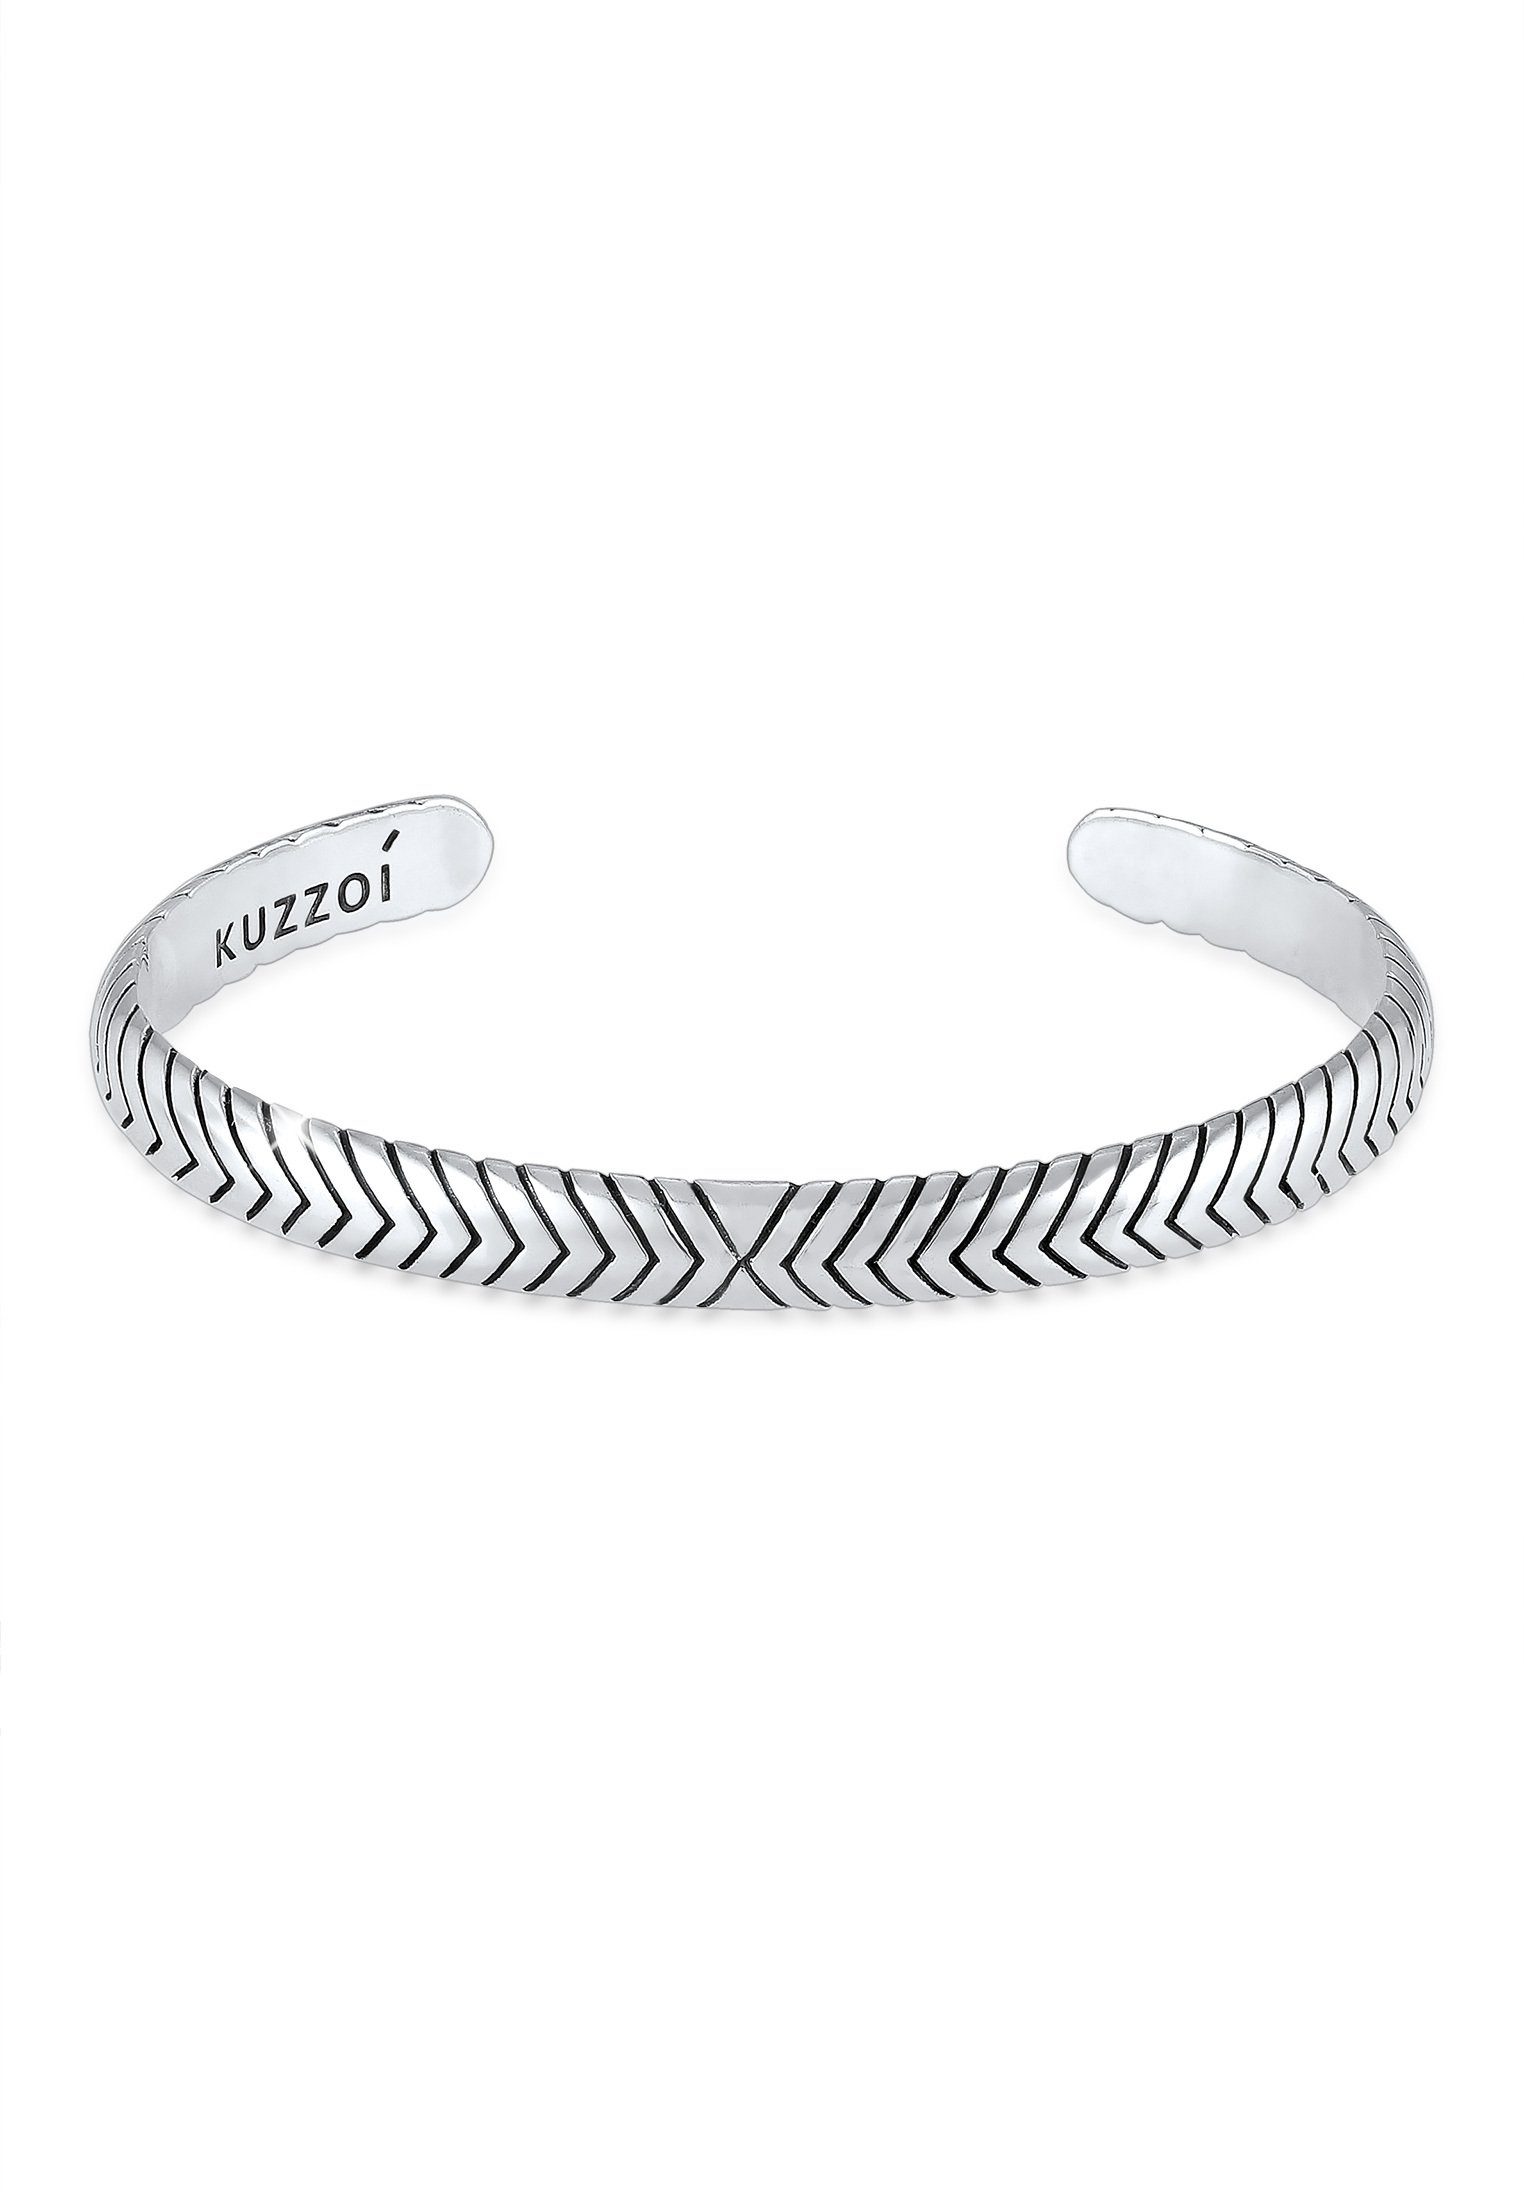 Herren Design Armreif 925 Herren für Kuzzoi Modischer Verstellbar Armband Armreif im Silber, trendigen Oxidiert